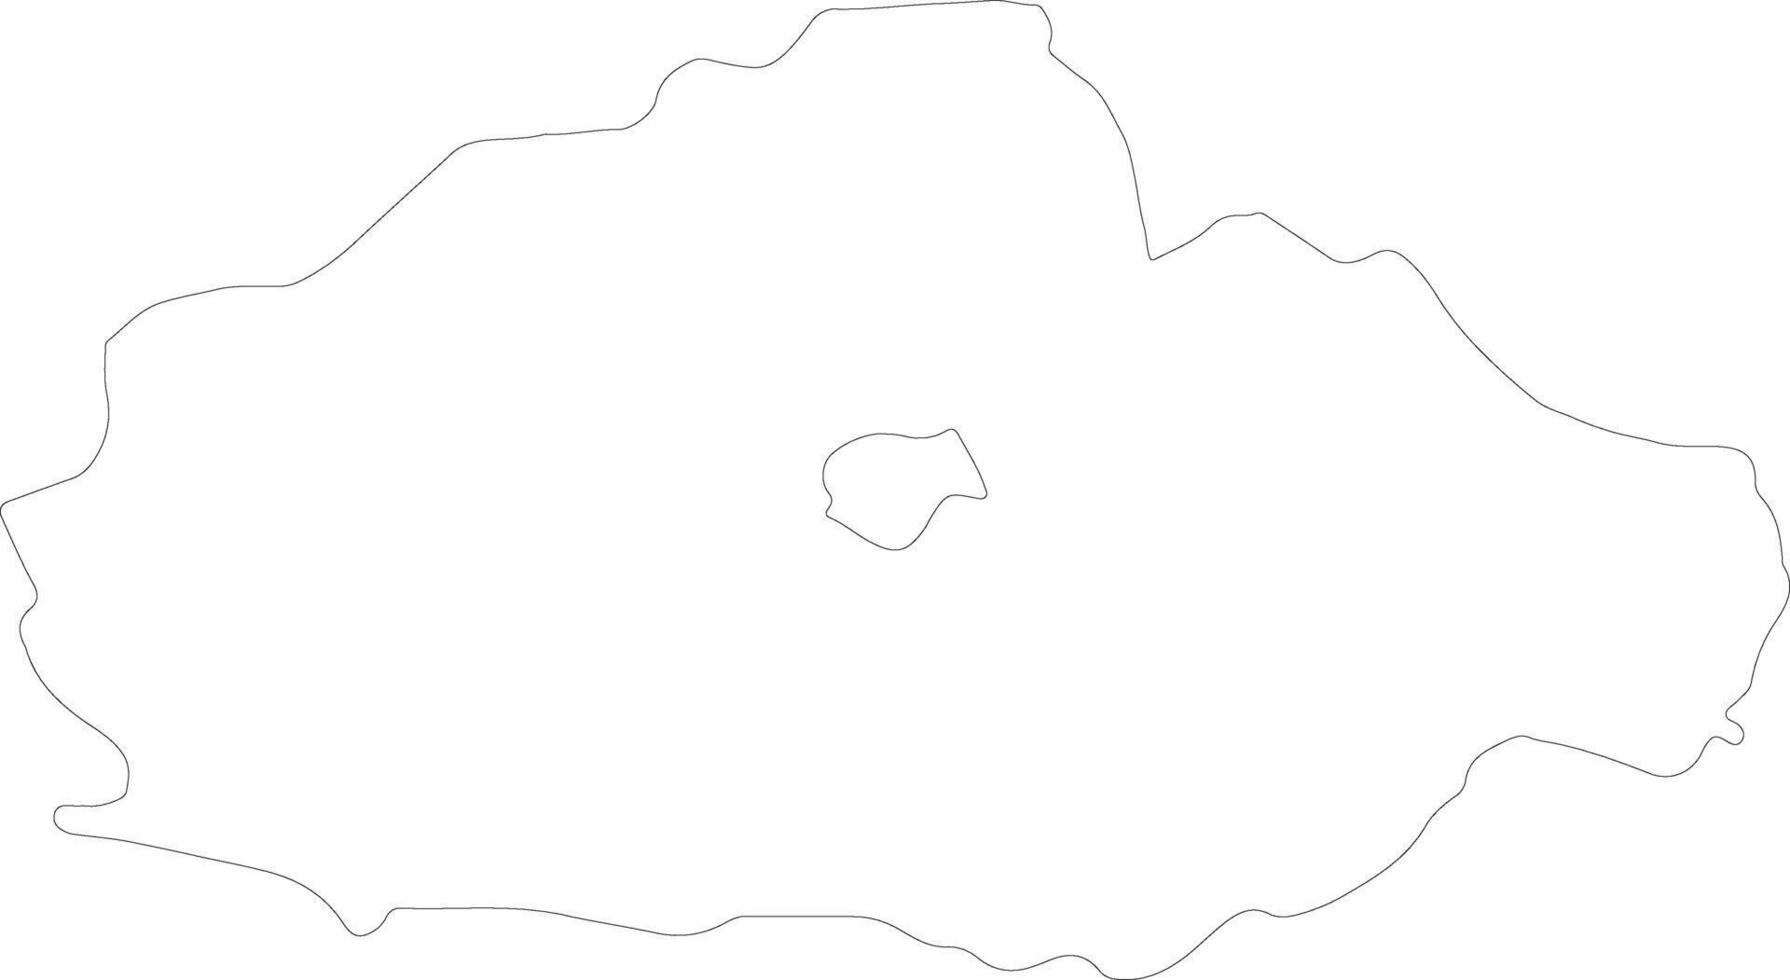 Baranya Hungary outline map vector